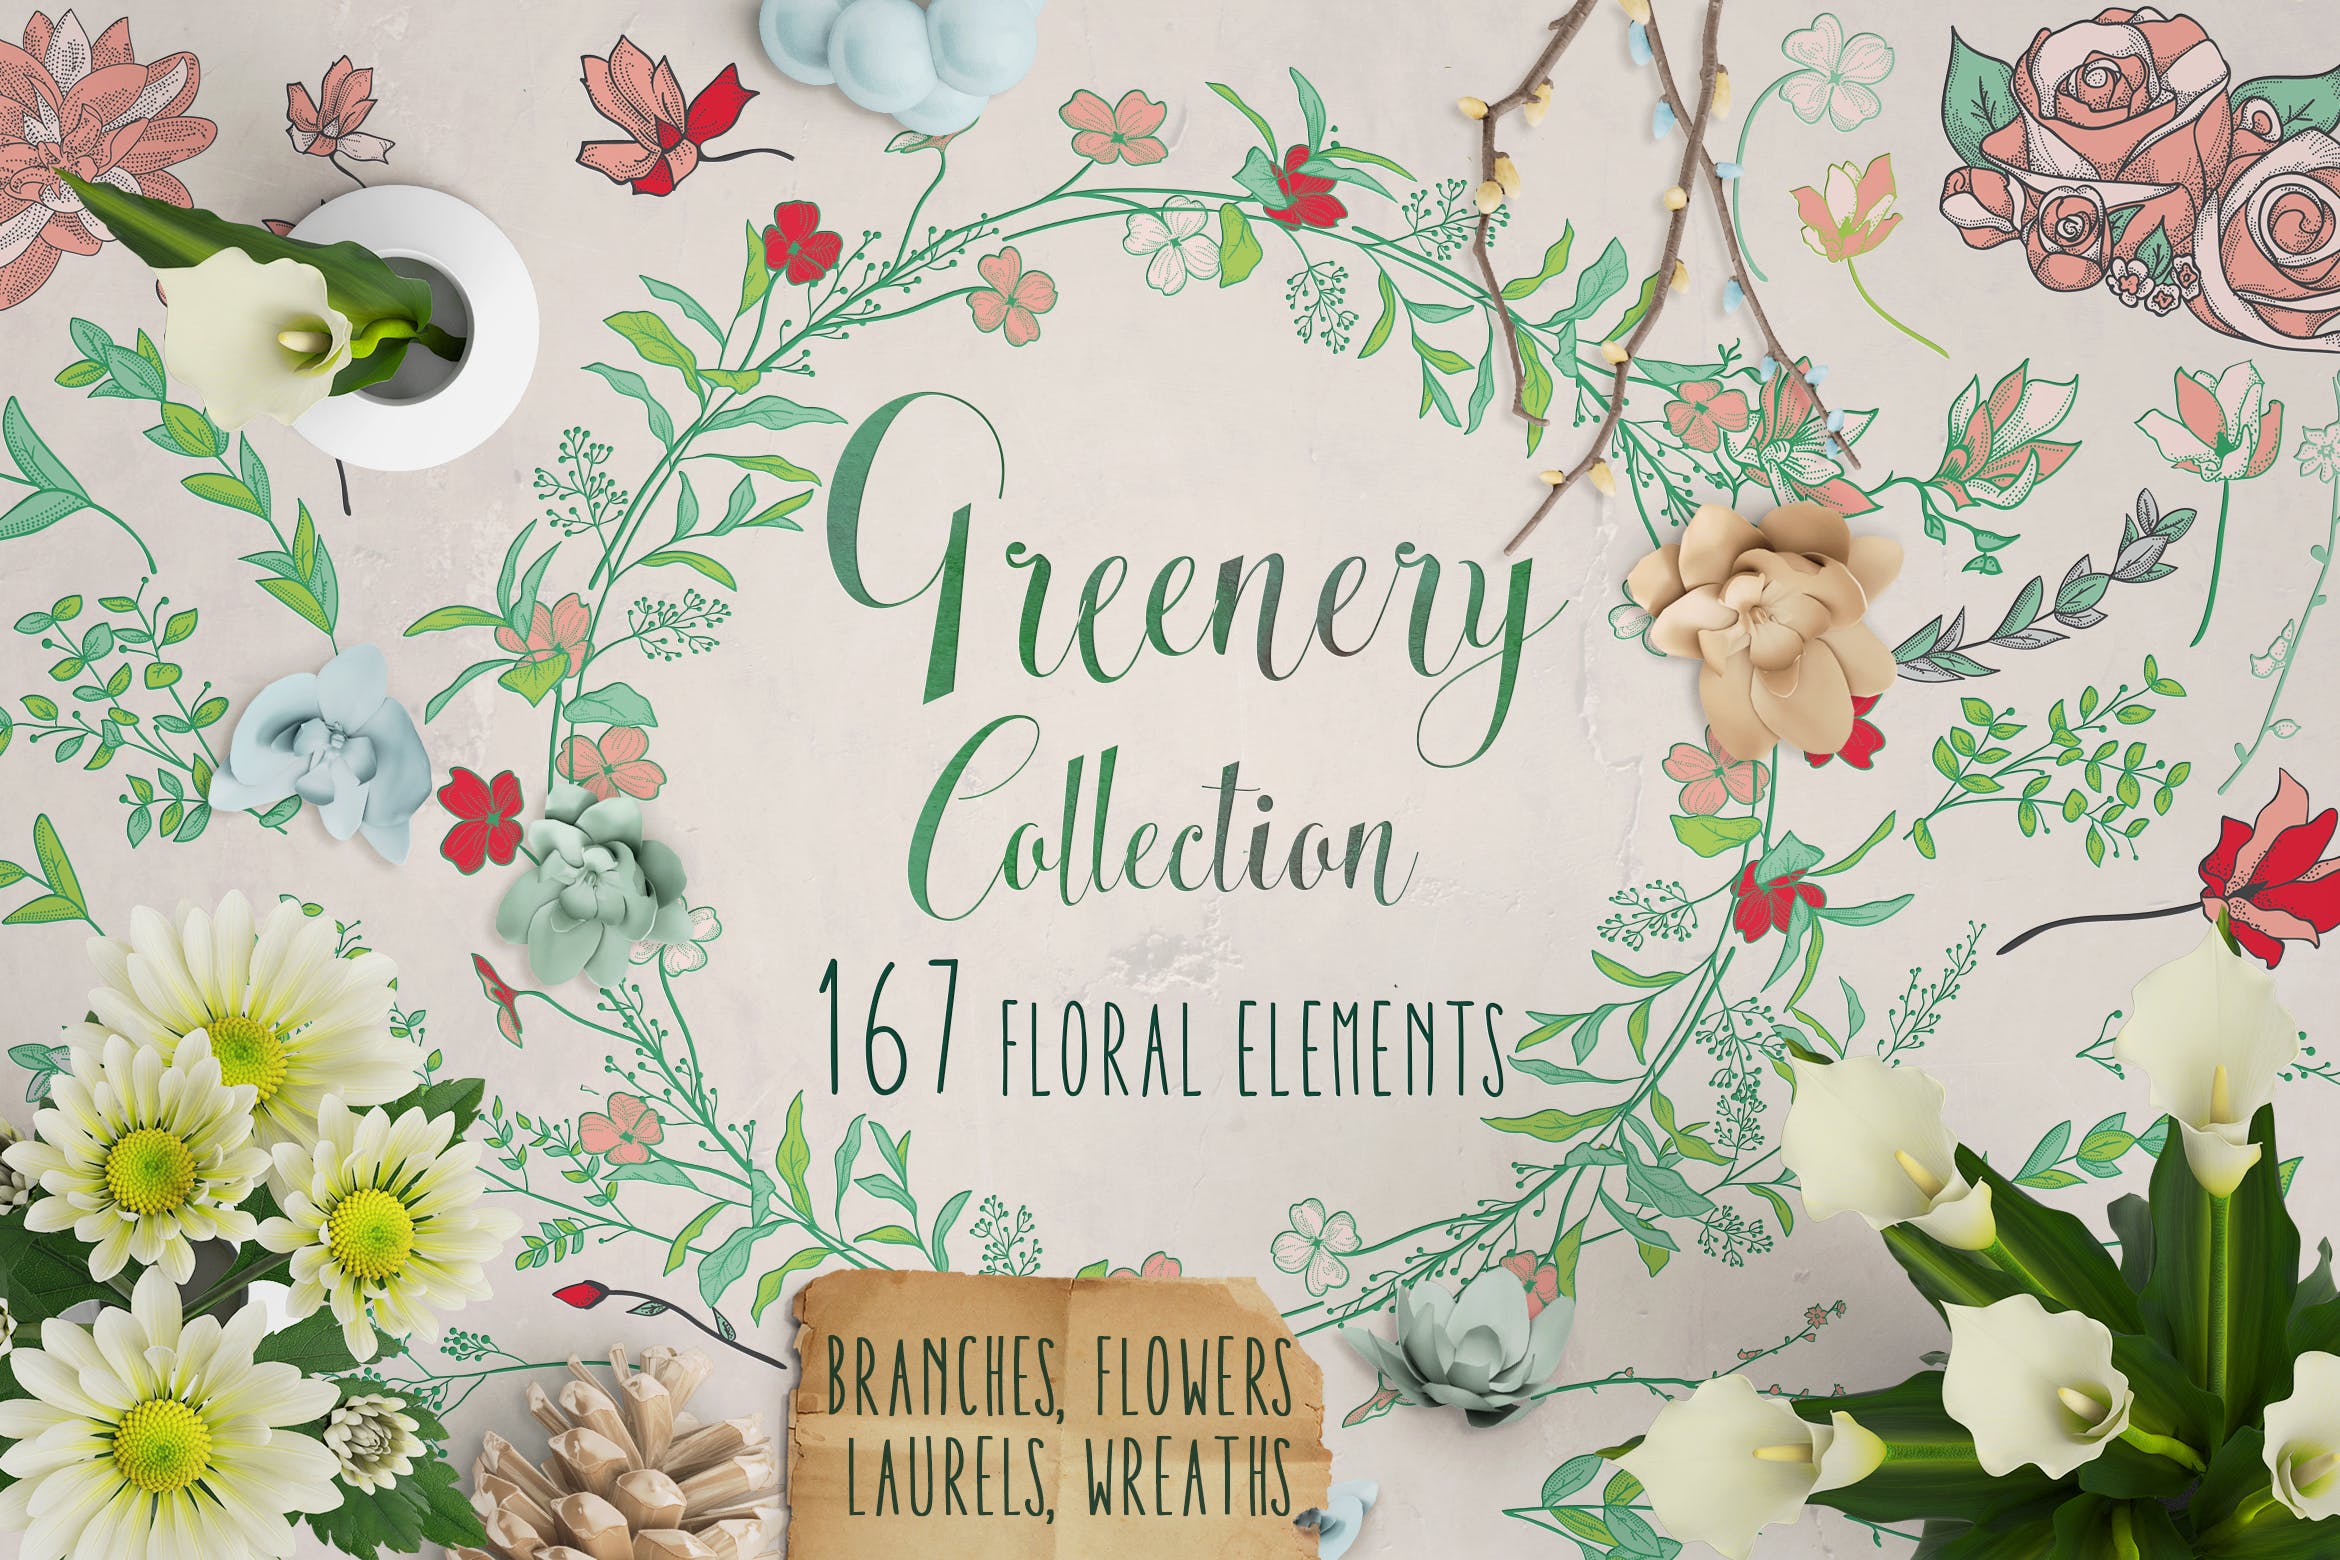 手绘乡村花卉涂鸦设计元素Greenery Collection167 Elements插图